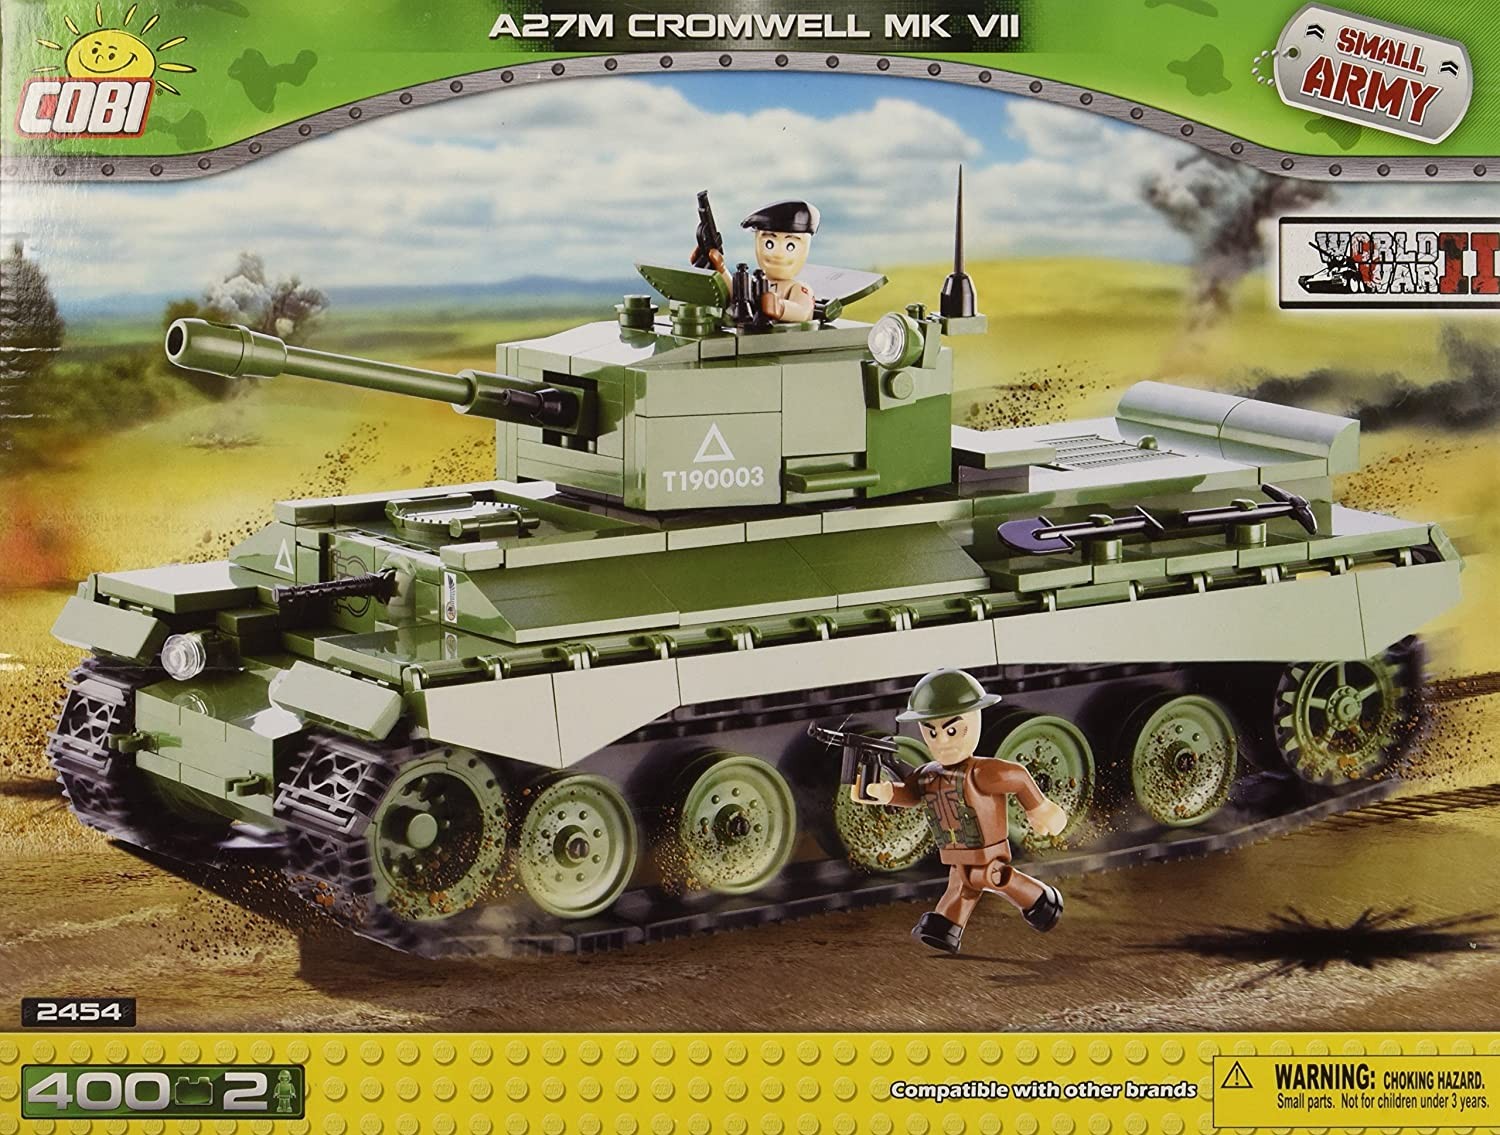 2454 - A27M Cromwell MK VII